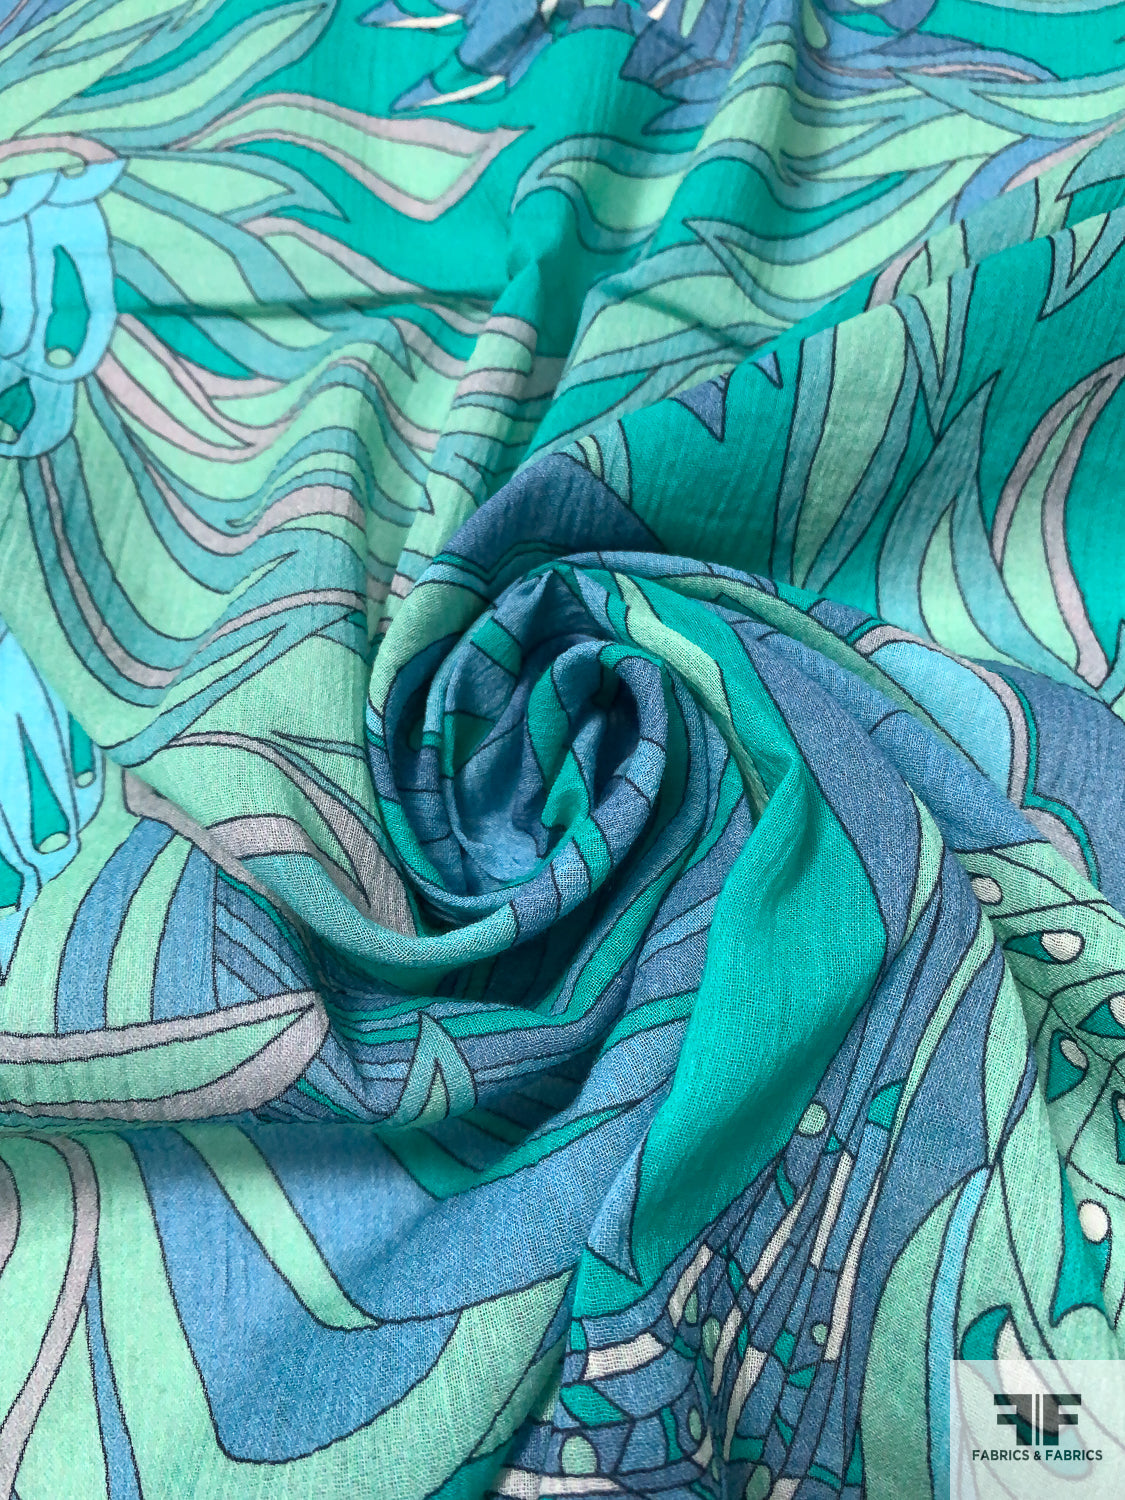 Exotic Leaf Printed Crinkled Cotton Gauze - Greens / Dusty Blues / Pale Lavender